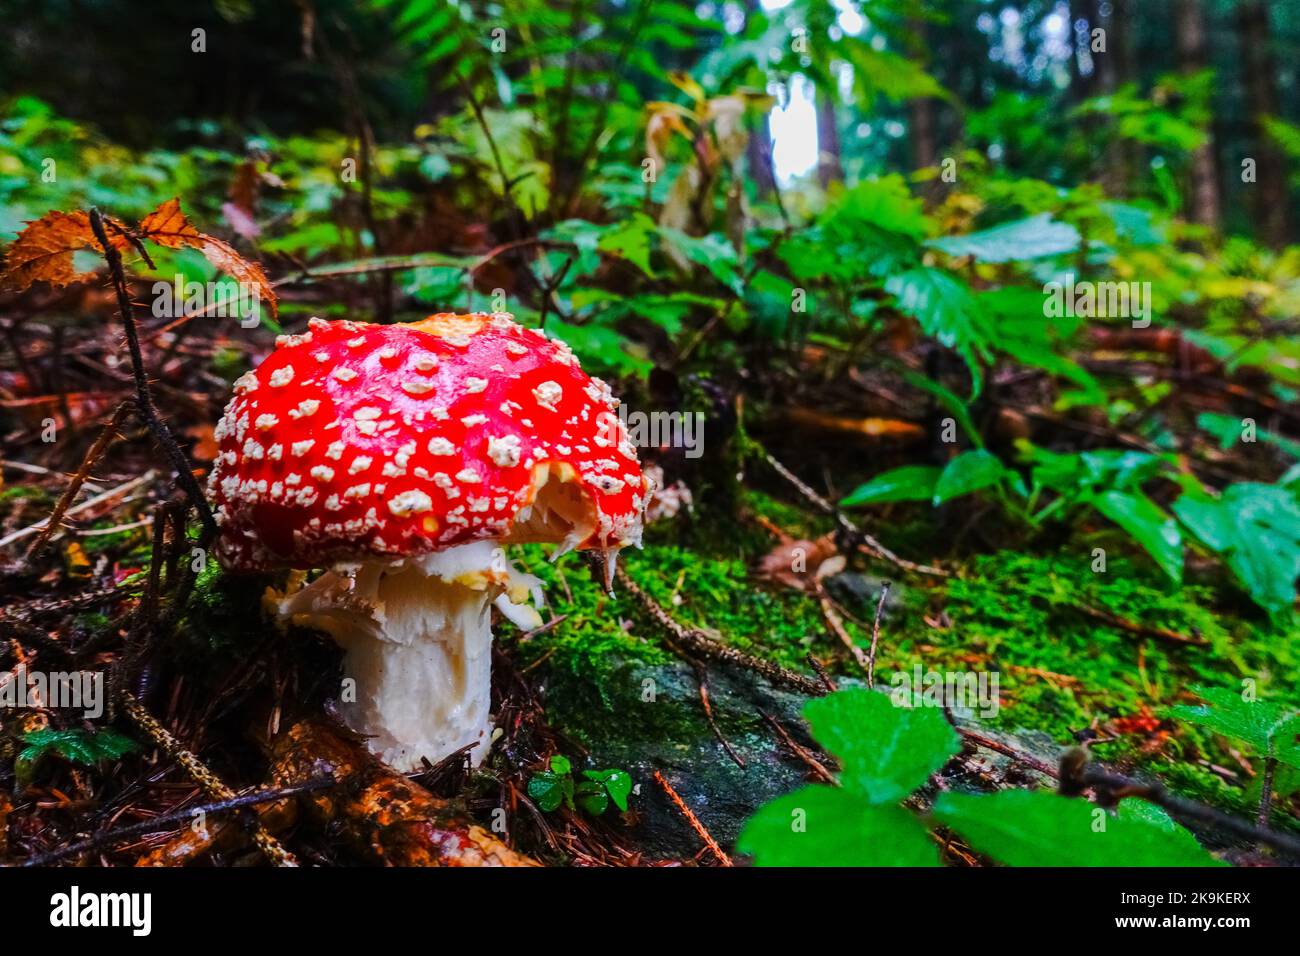 singel wonderful fly agaric mushroom in green forest in autumn Stock Photo